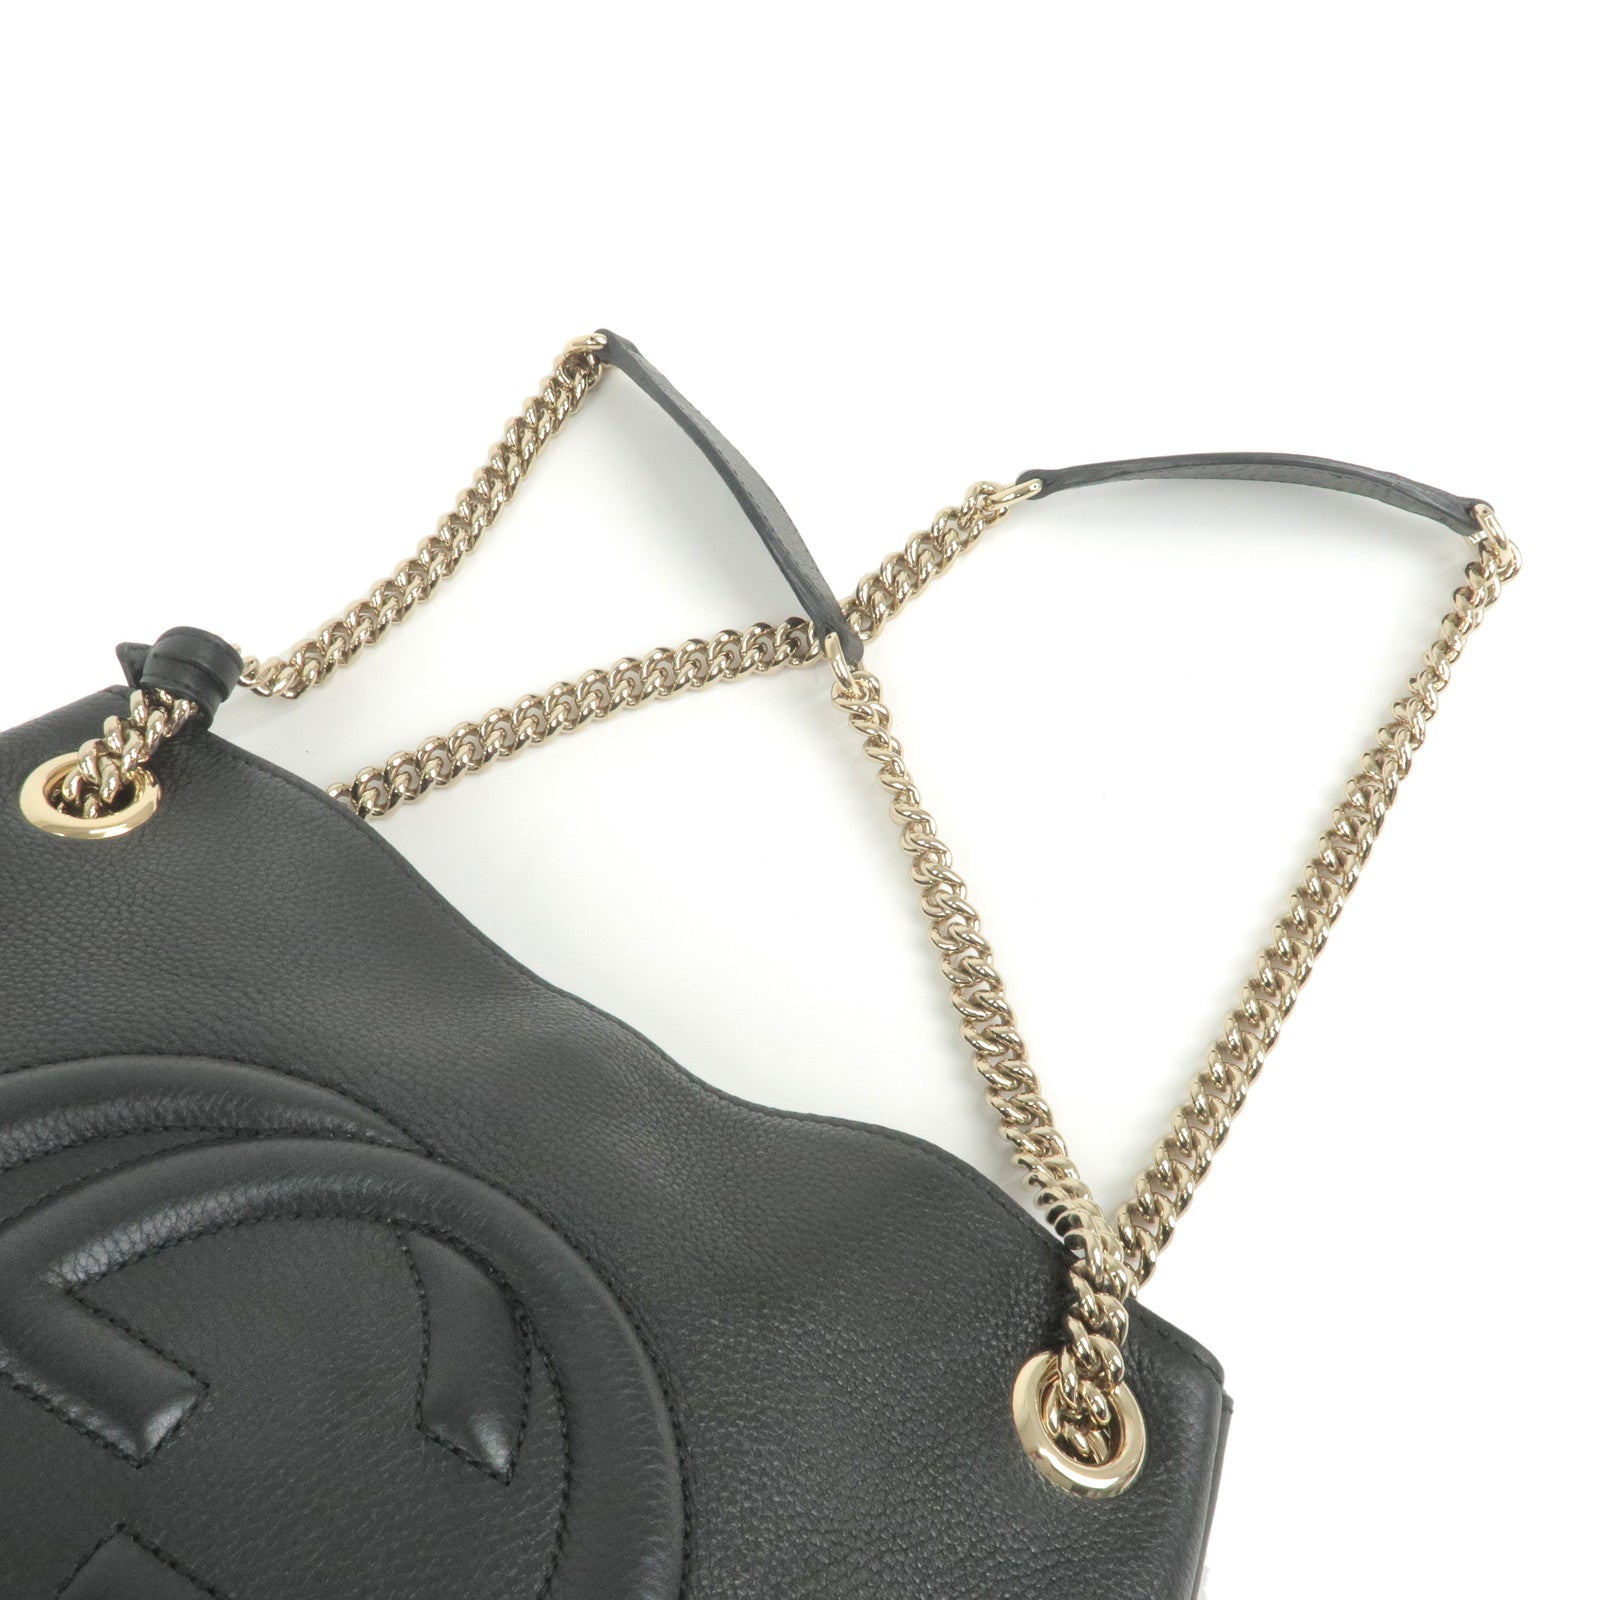 Gucci Soho Gold Pebbled Leather Chain Shoulder Bag